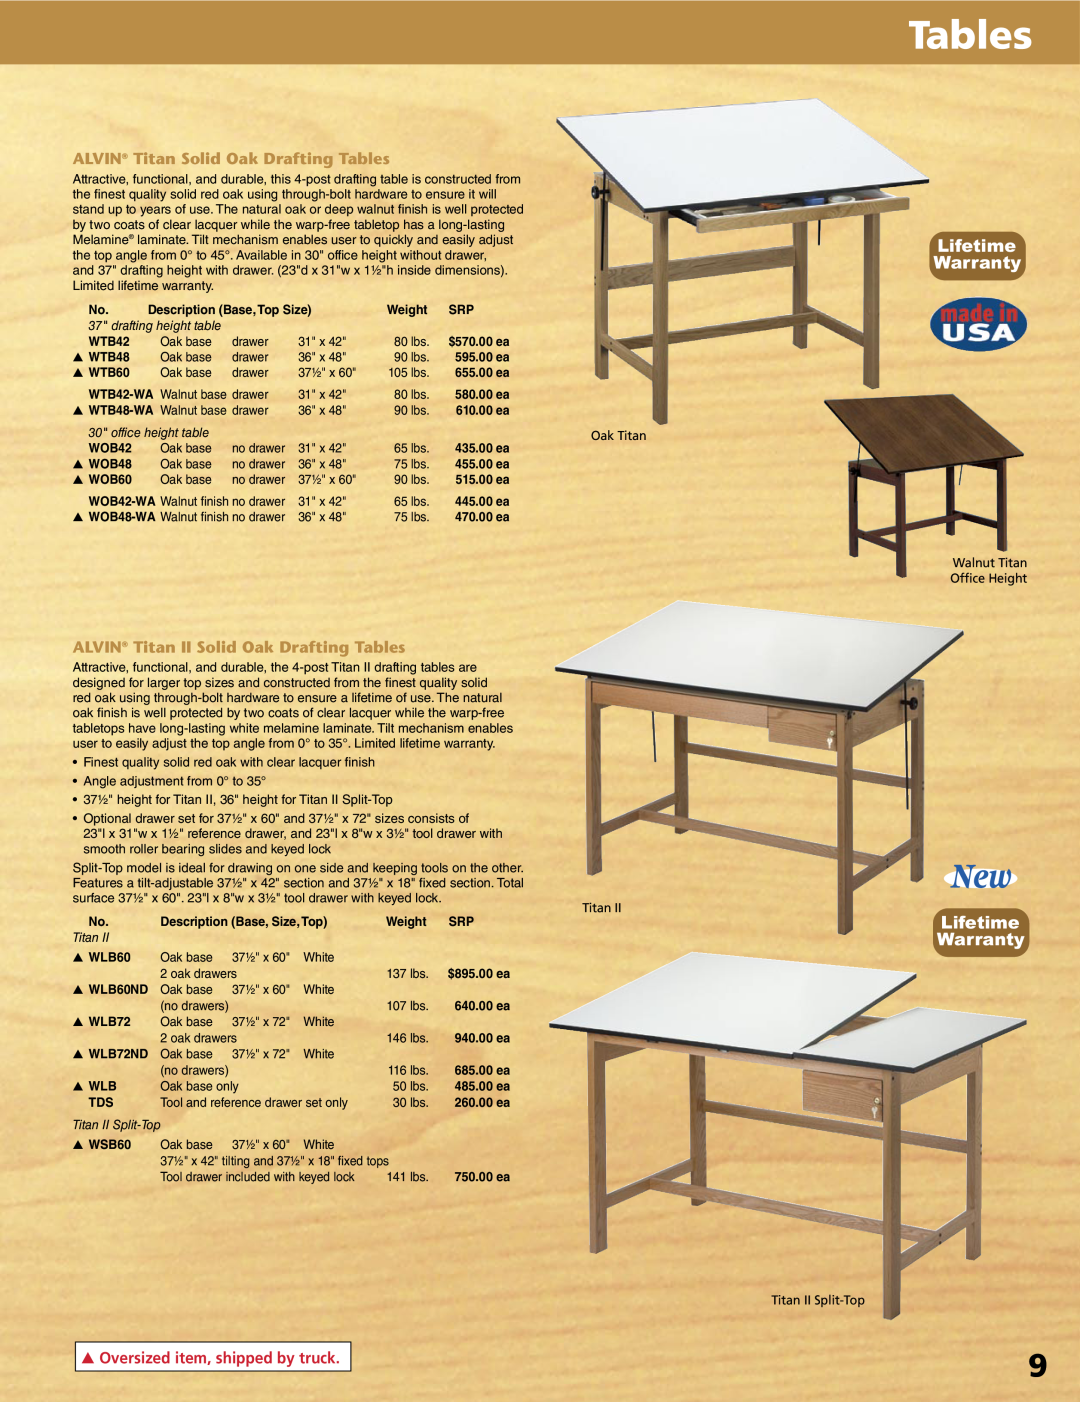 Alvin XV-4-XB manual Lifetime Warranty, ALVIN Titan Solid Oak Drafting Tables, ALVIN Titan II Solid Oak Drafting Tables 